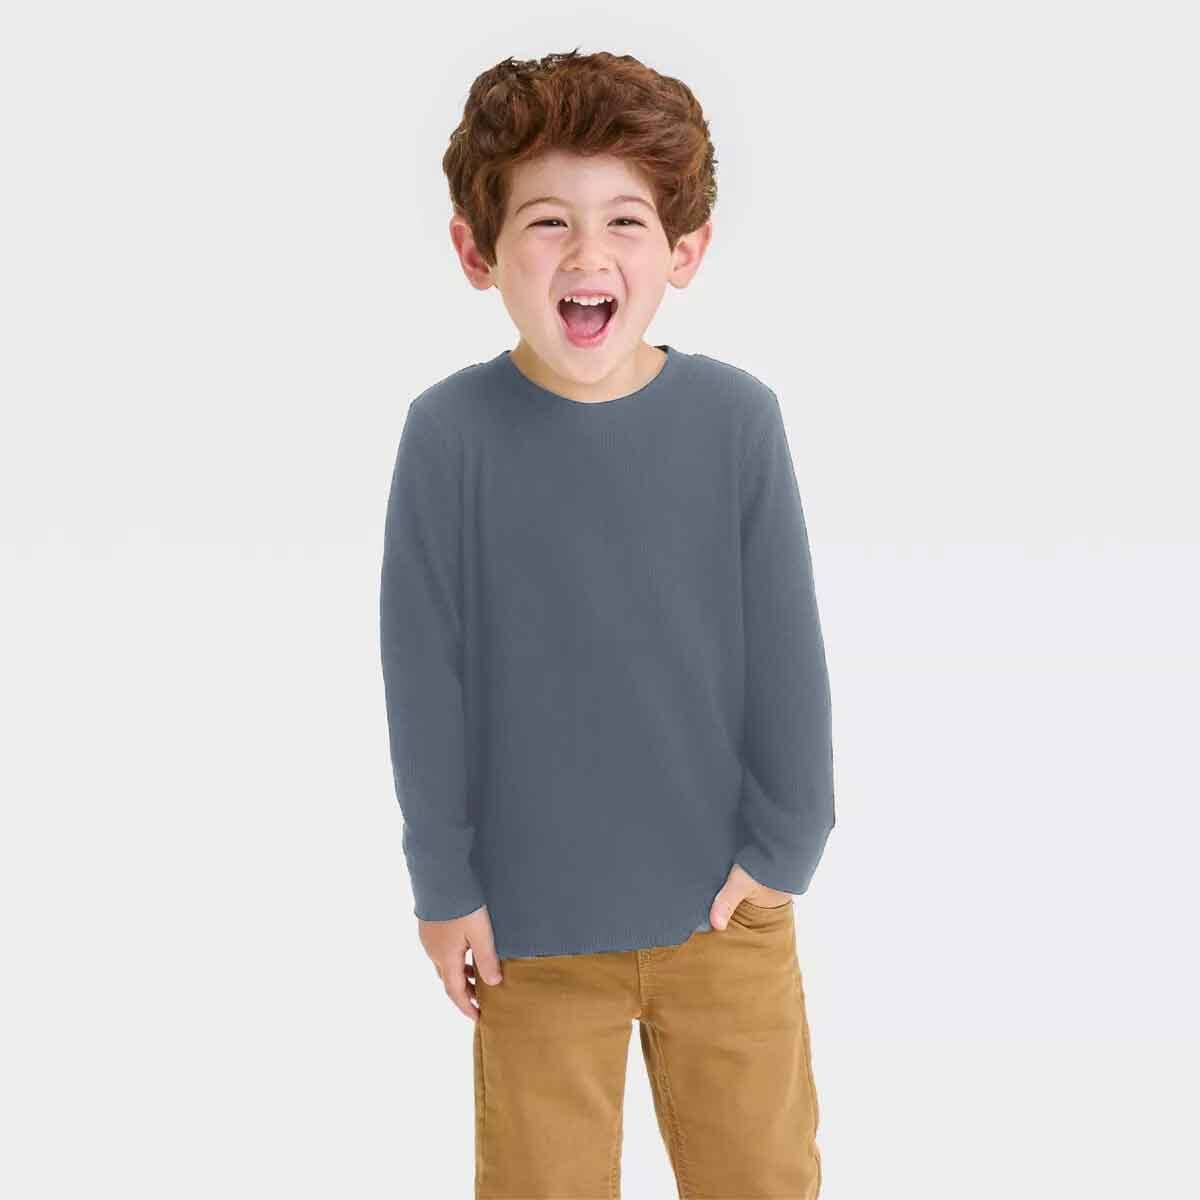 Lithgow Kid's Thermal Long Sleeve Winter Knit Wear Shirt Boy's Sweat Shirt RAM Powder Blue 18 (6-9 Months) 